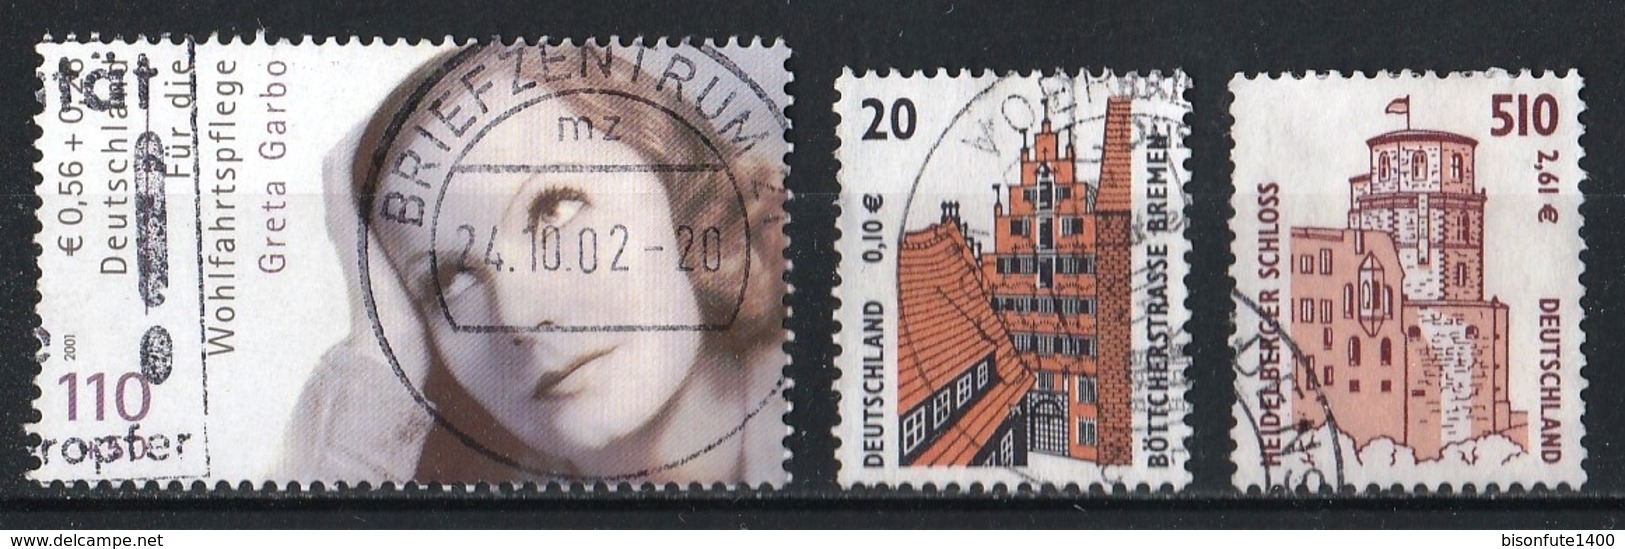 Allemagne Fédérale 2001 : Timbres Yvert & Tellier N° 2052 - 2056 Et 2057. - Used Stamps